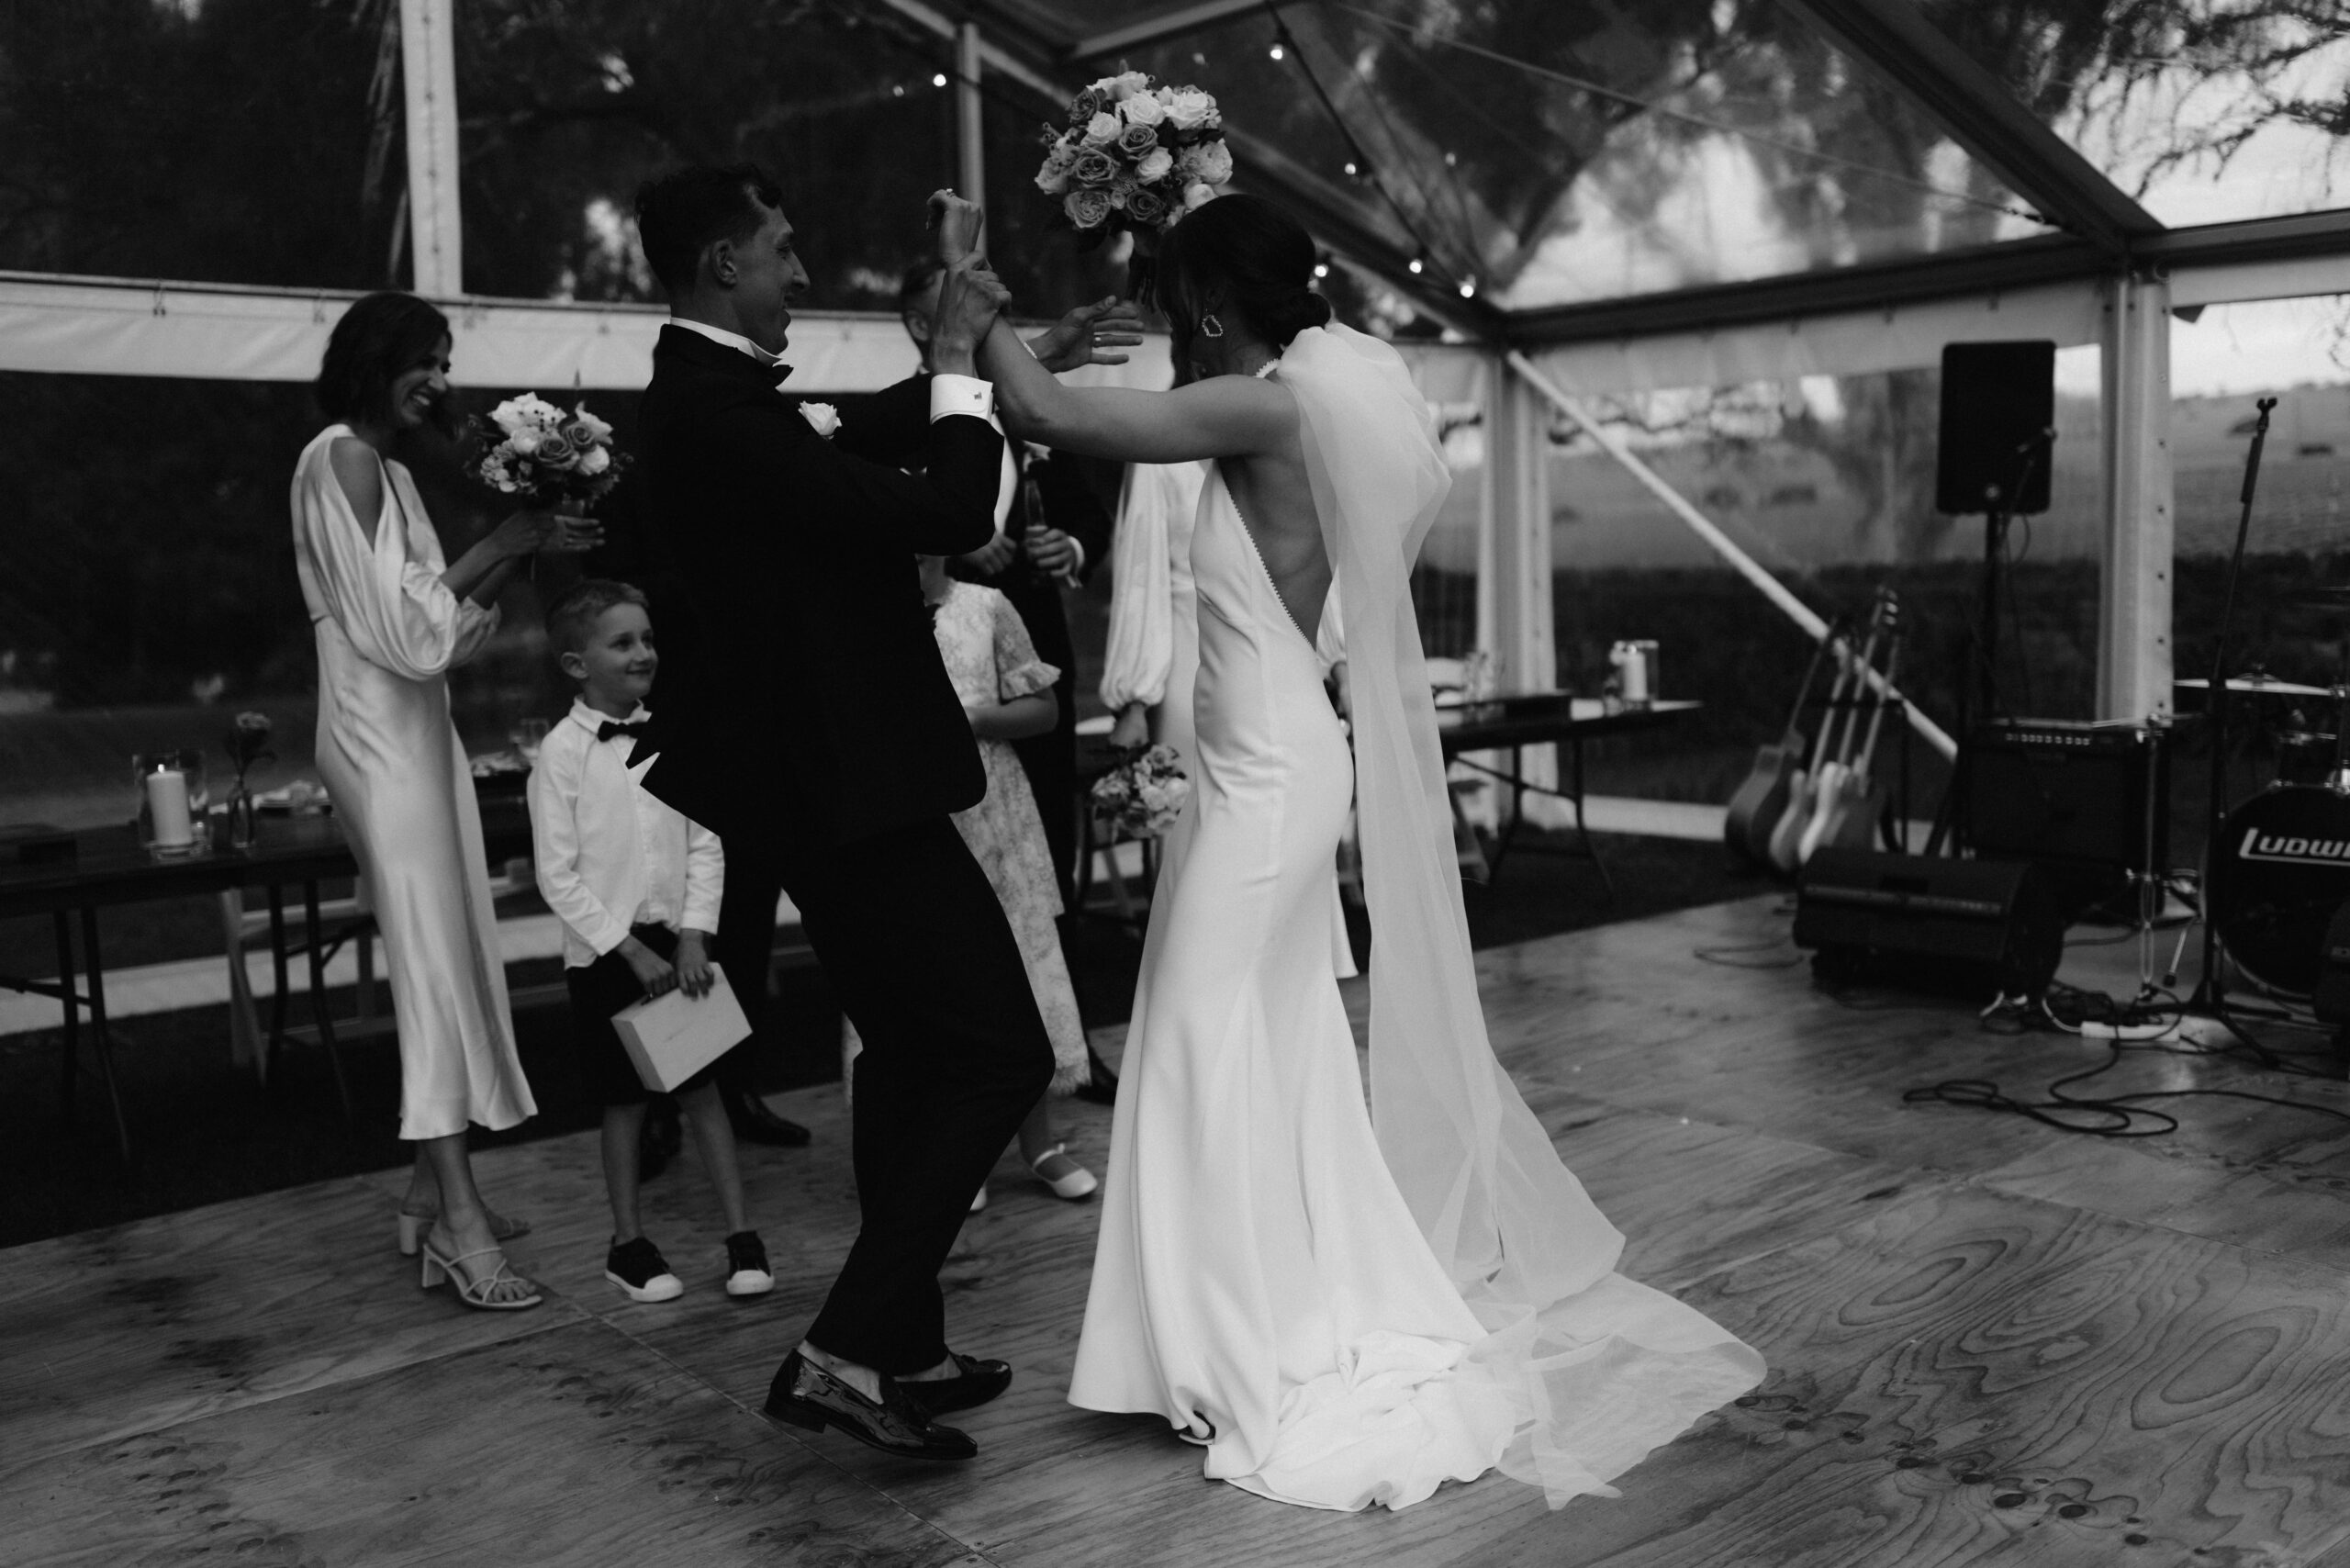 Olivia and Patrick dancing on the reception dancefloor at night